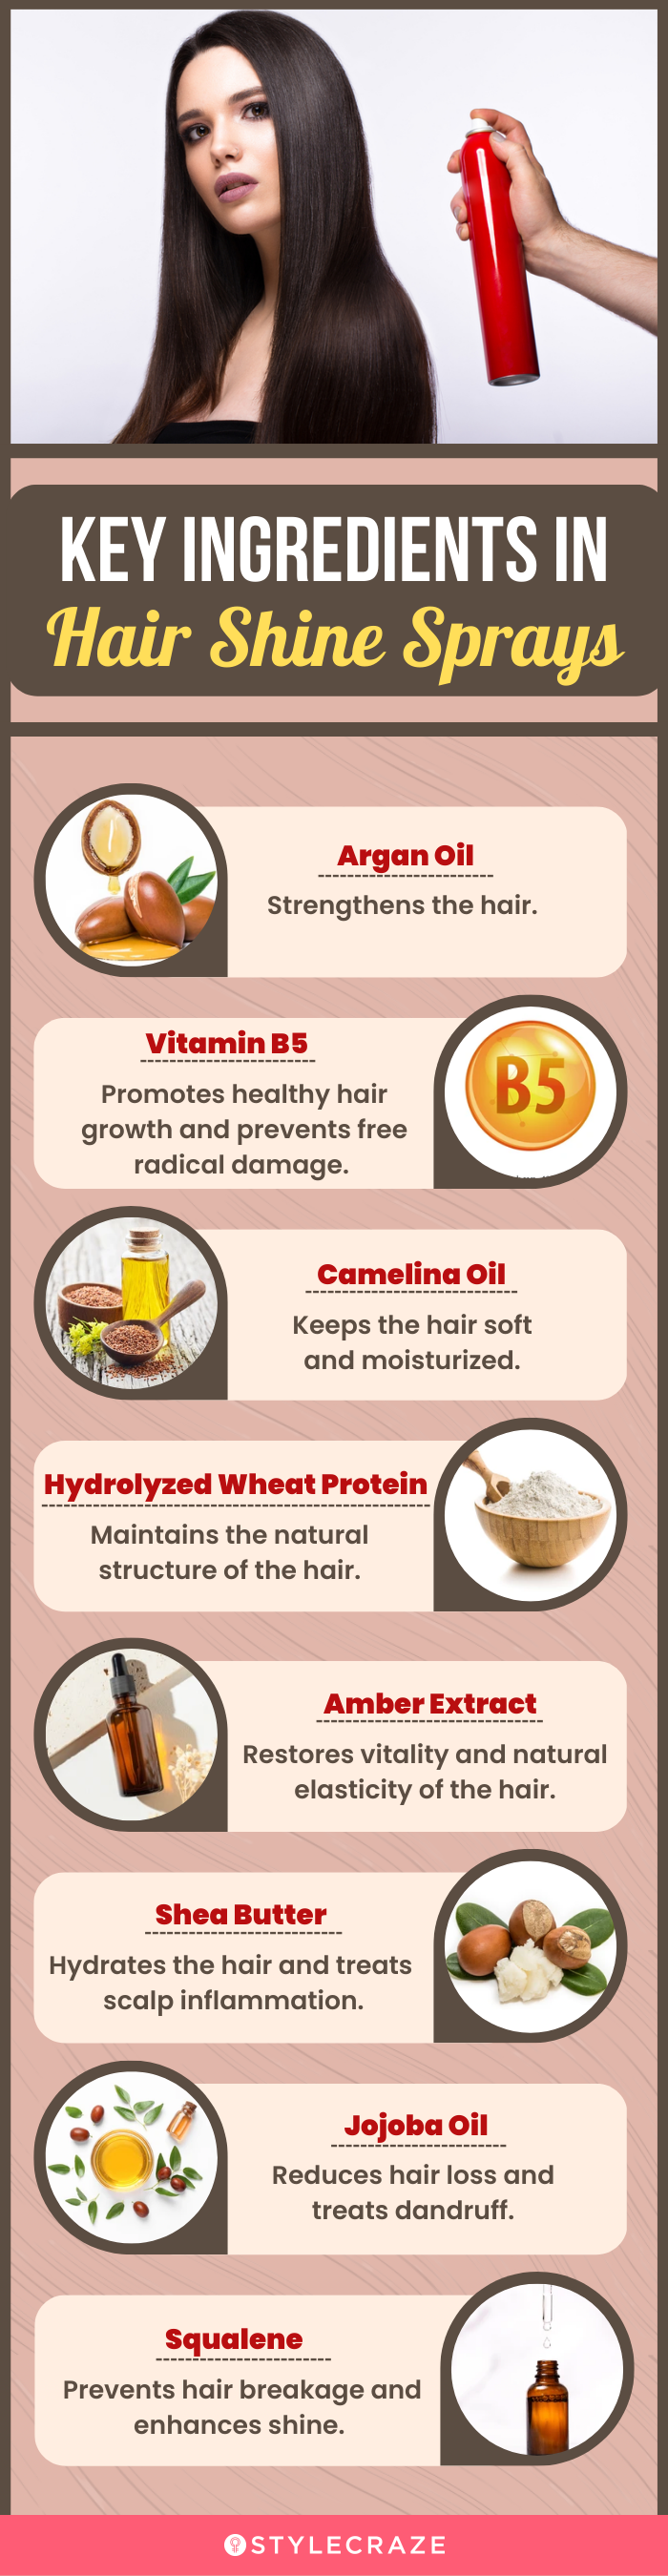 Key Ingredients In Hair Shine Sprays (infographic)